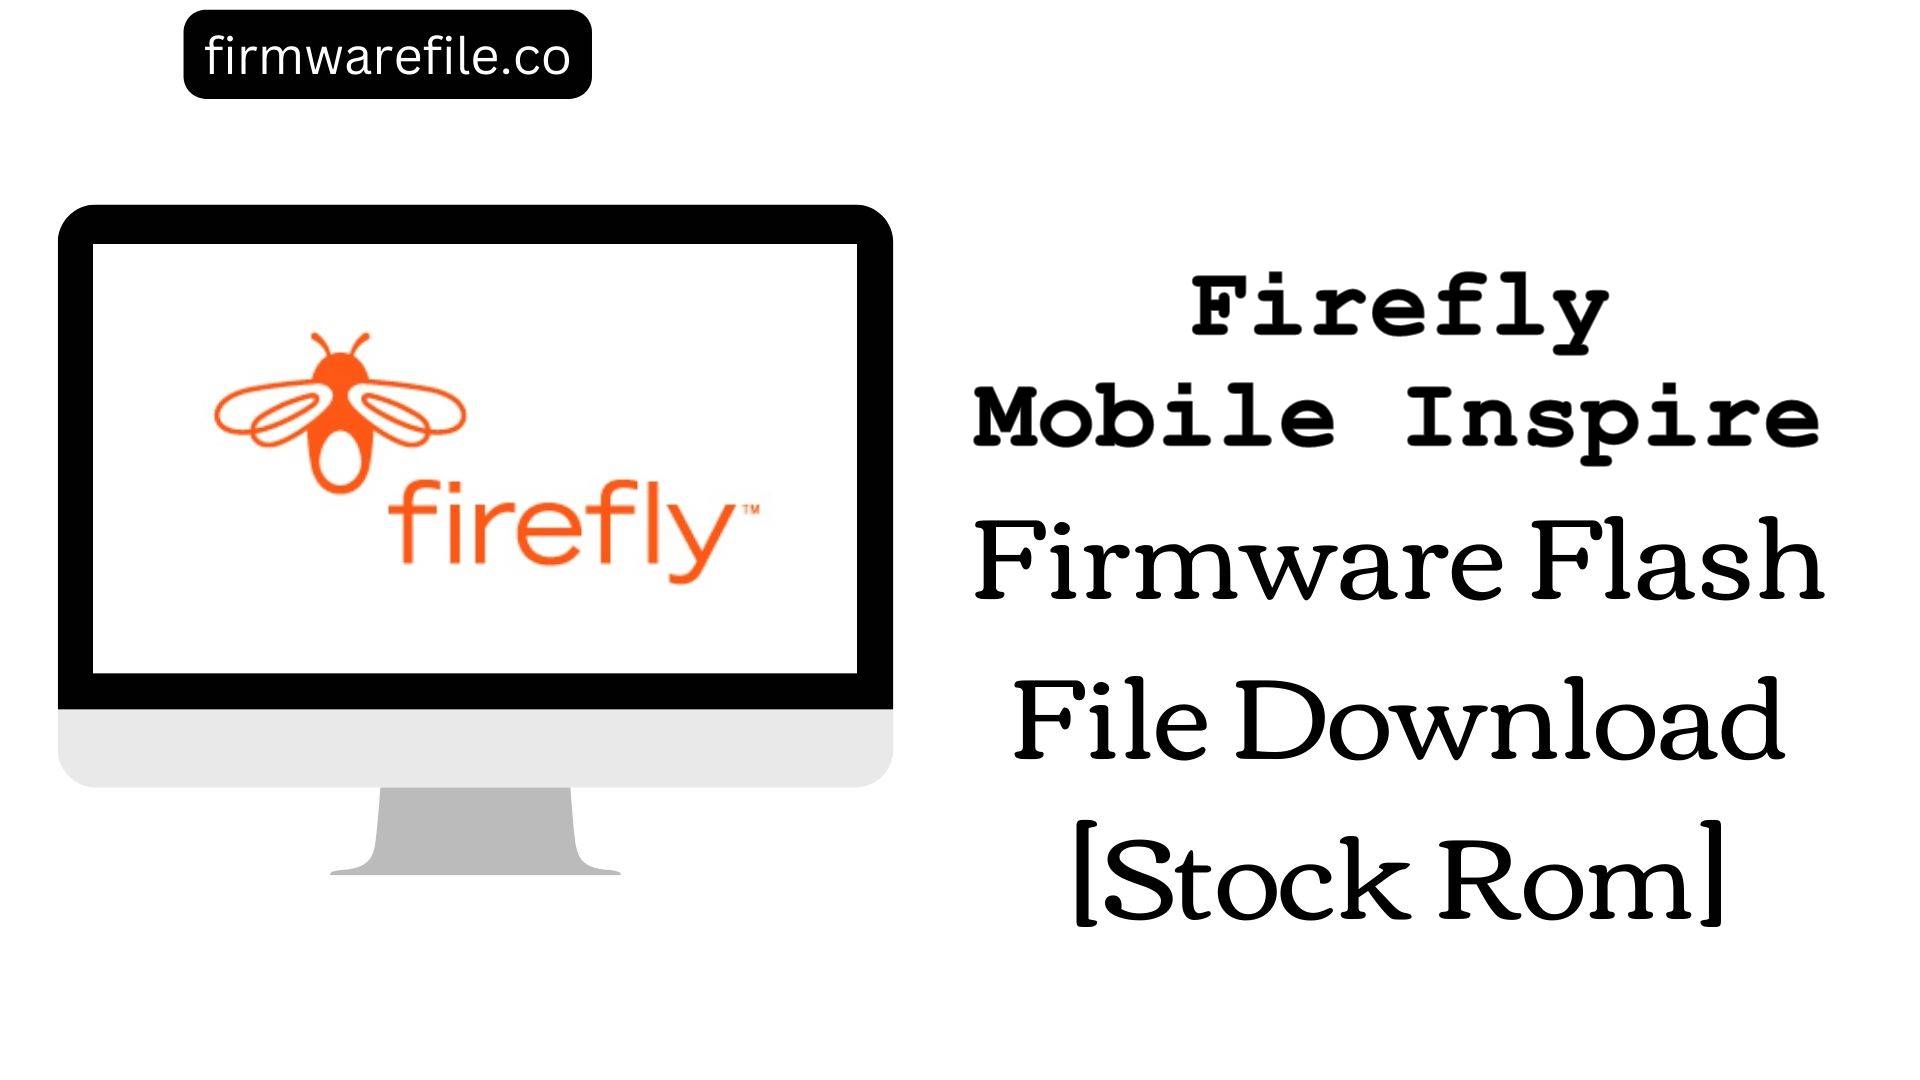 Firefly Mobile Inspire